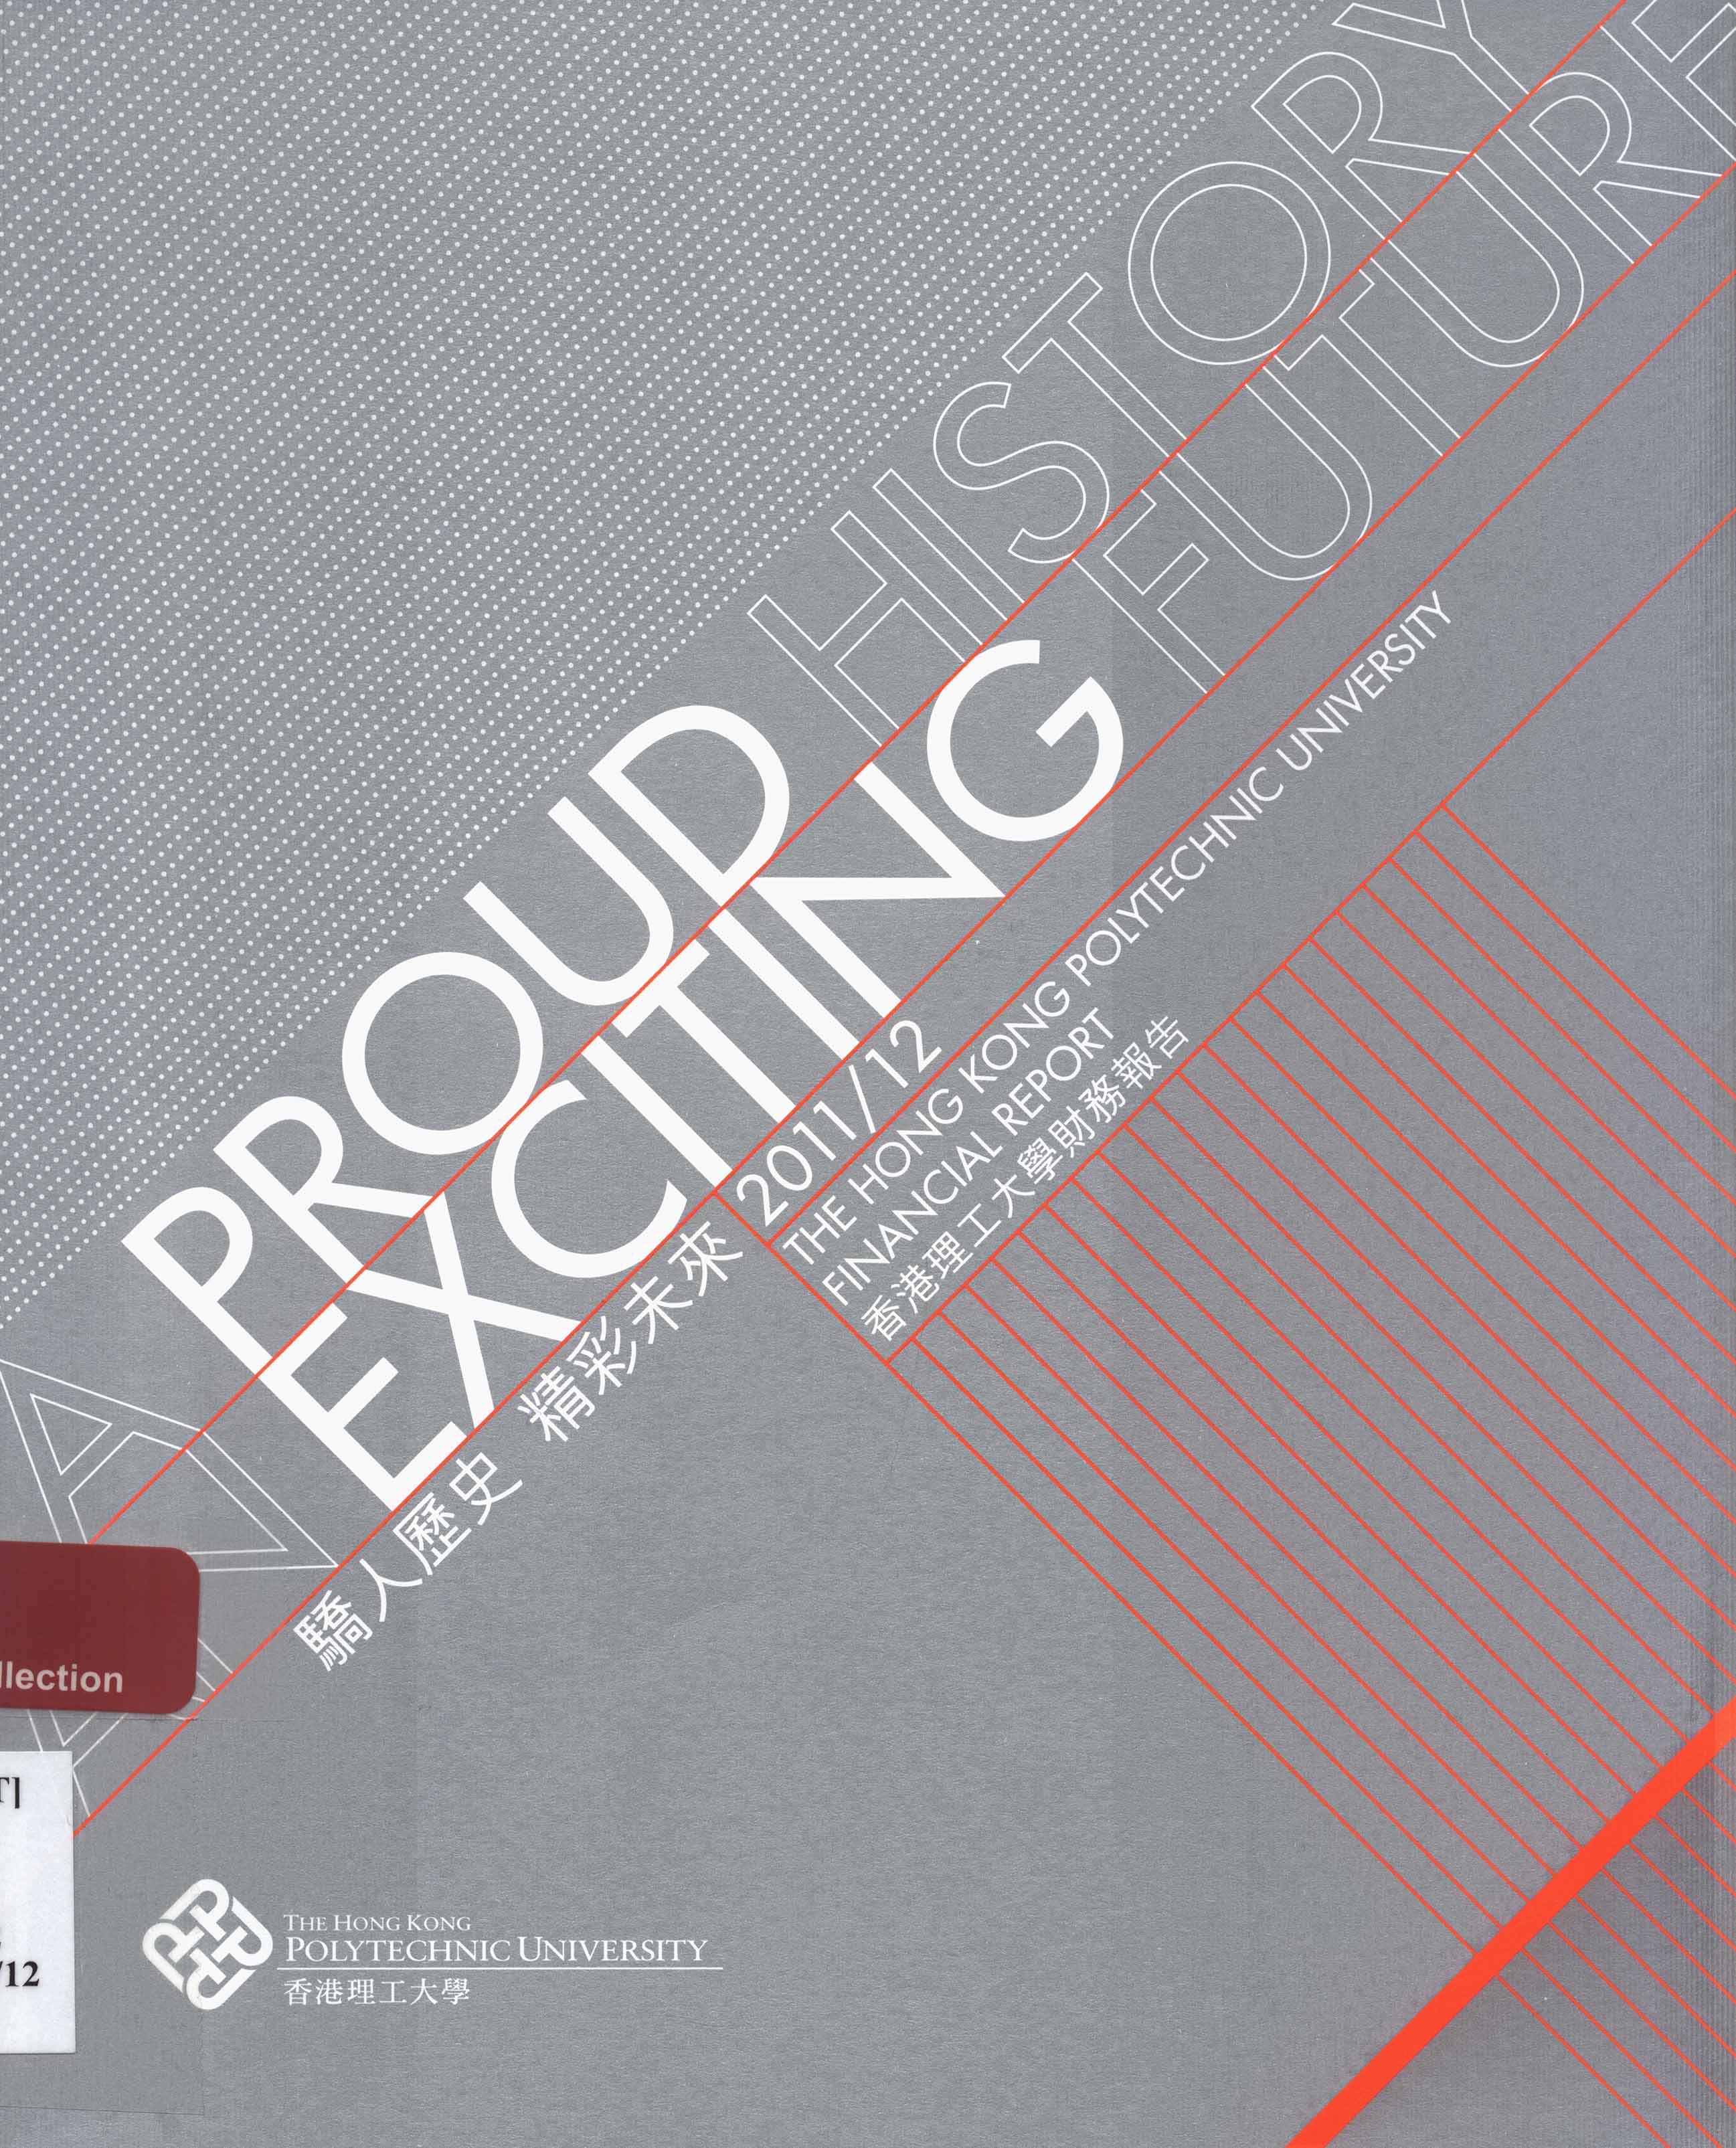 Hong Kong Polytechnic University Financial report 2011/12